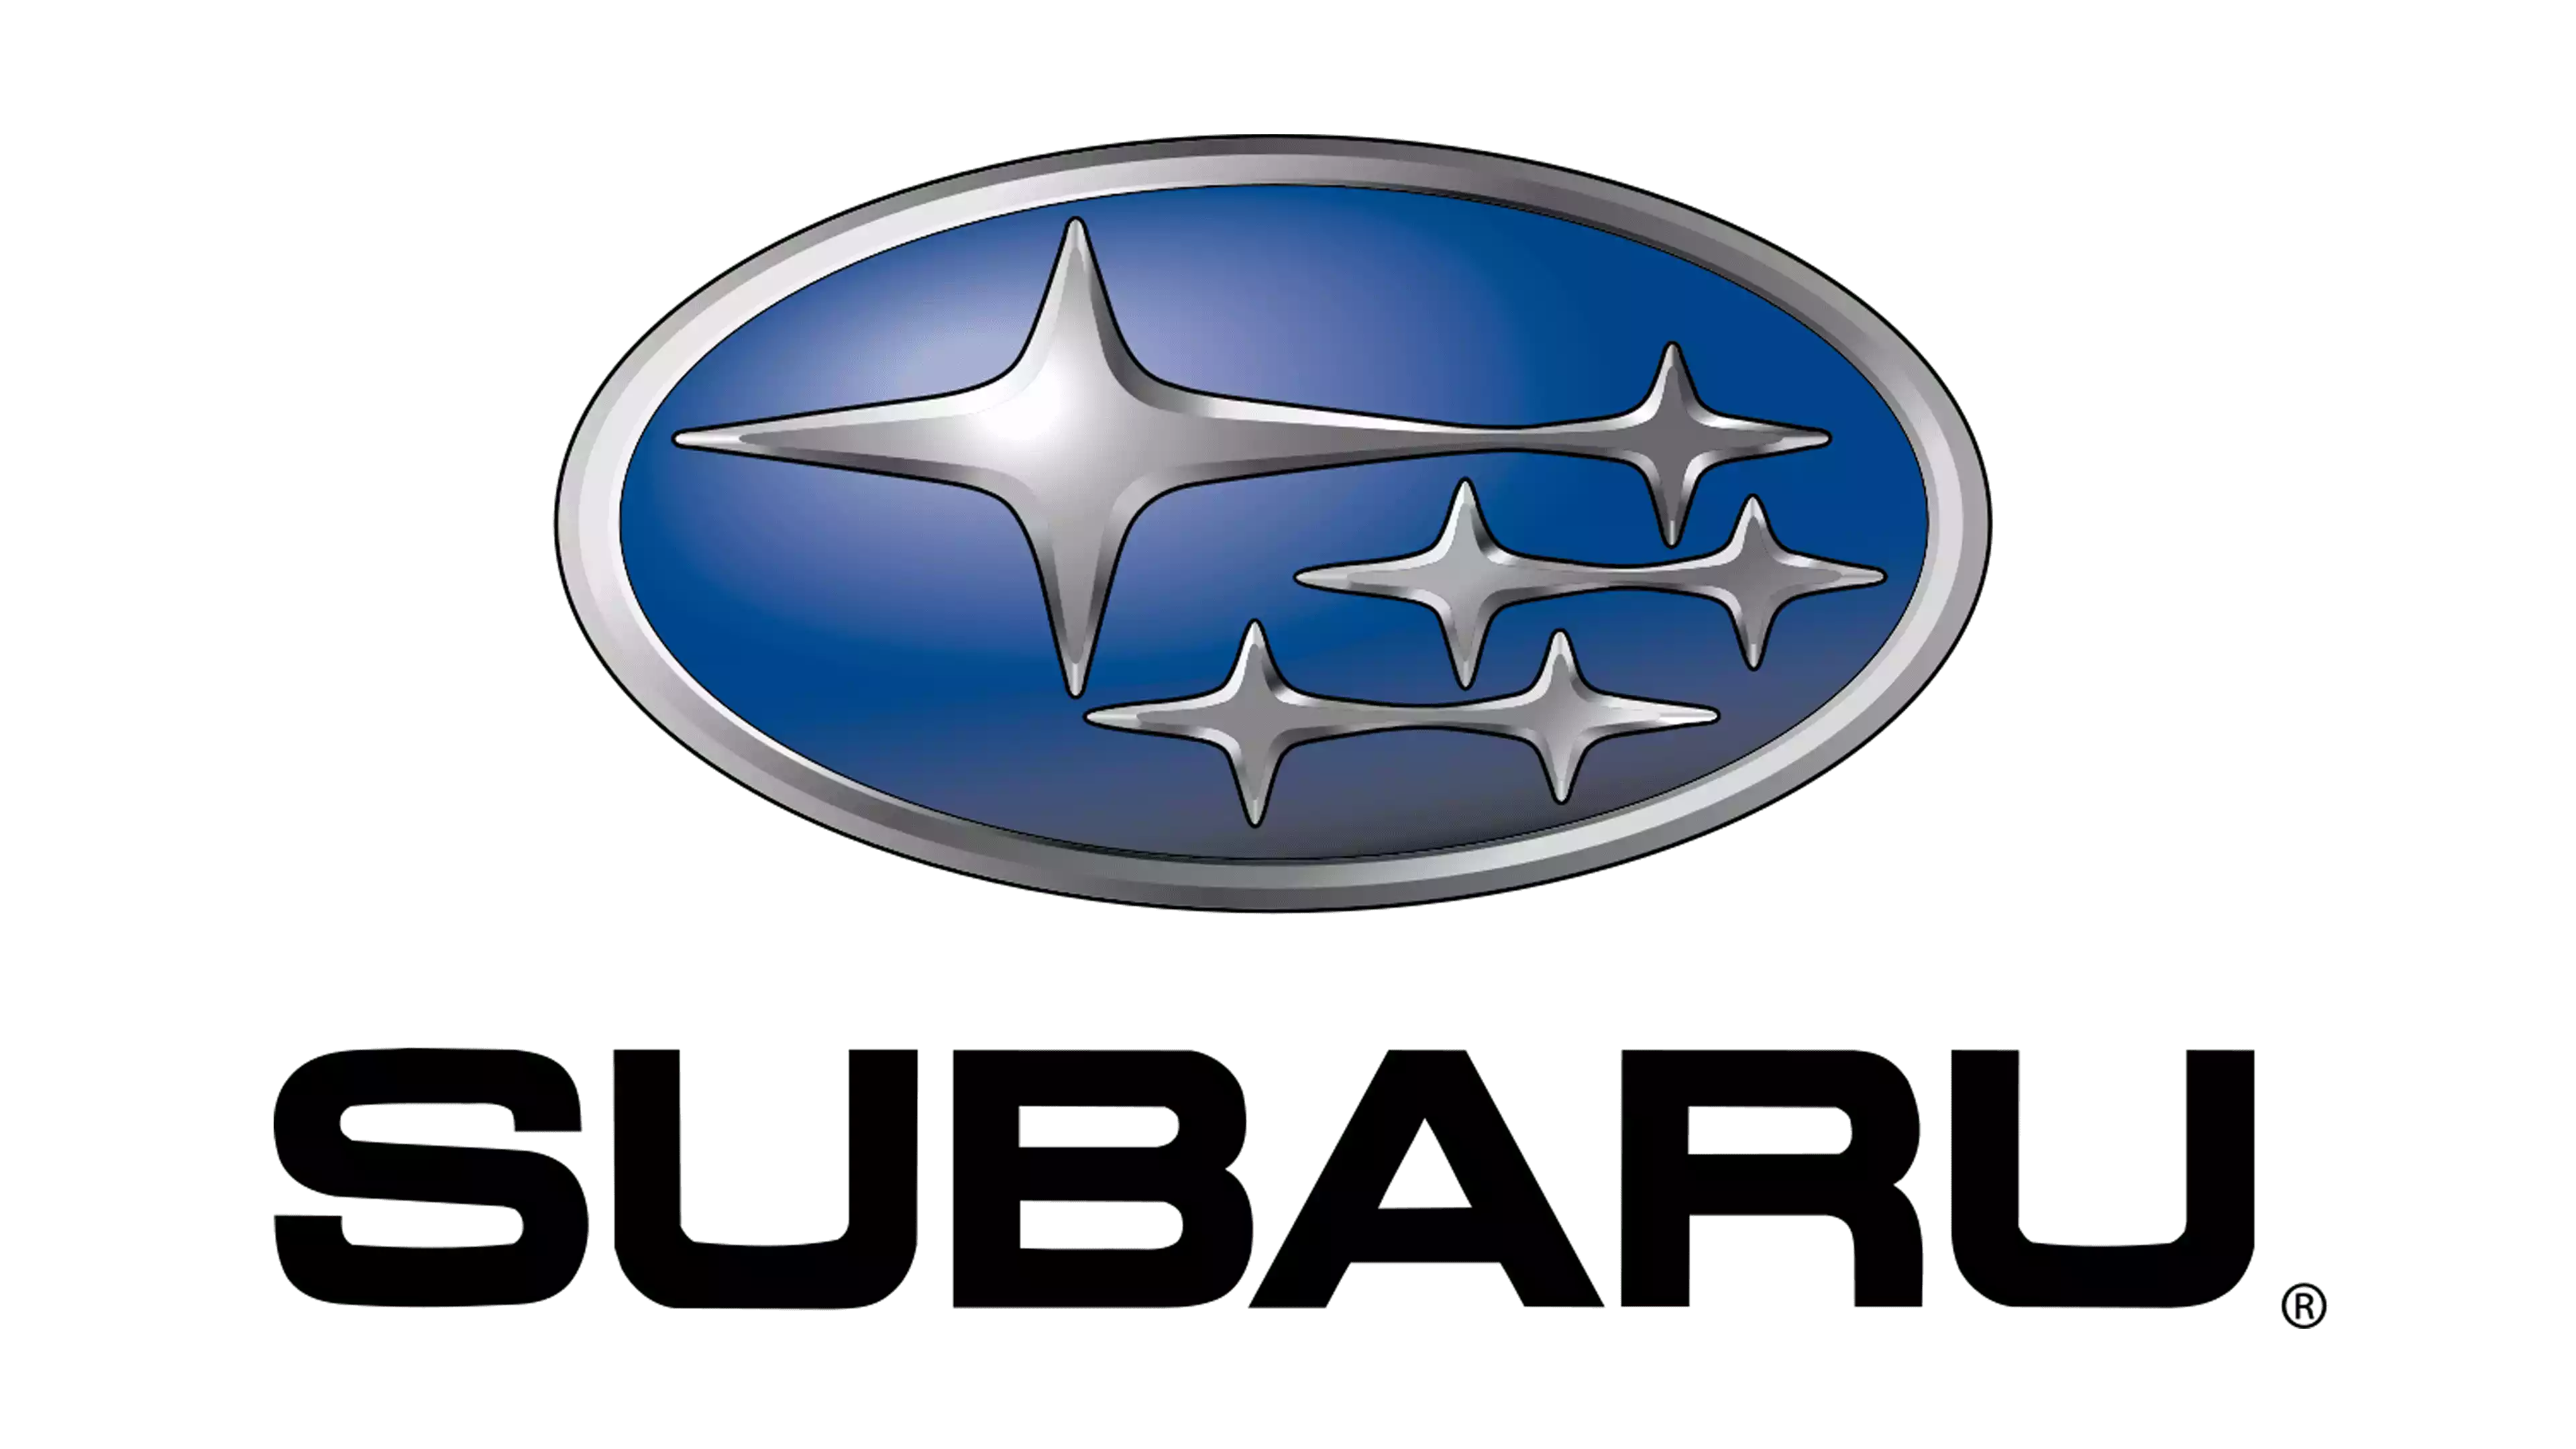 Subaru - Automotive Innovation Partner